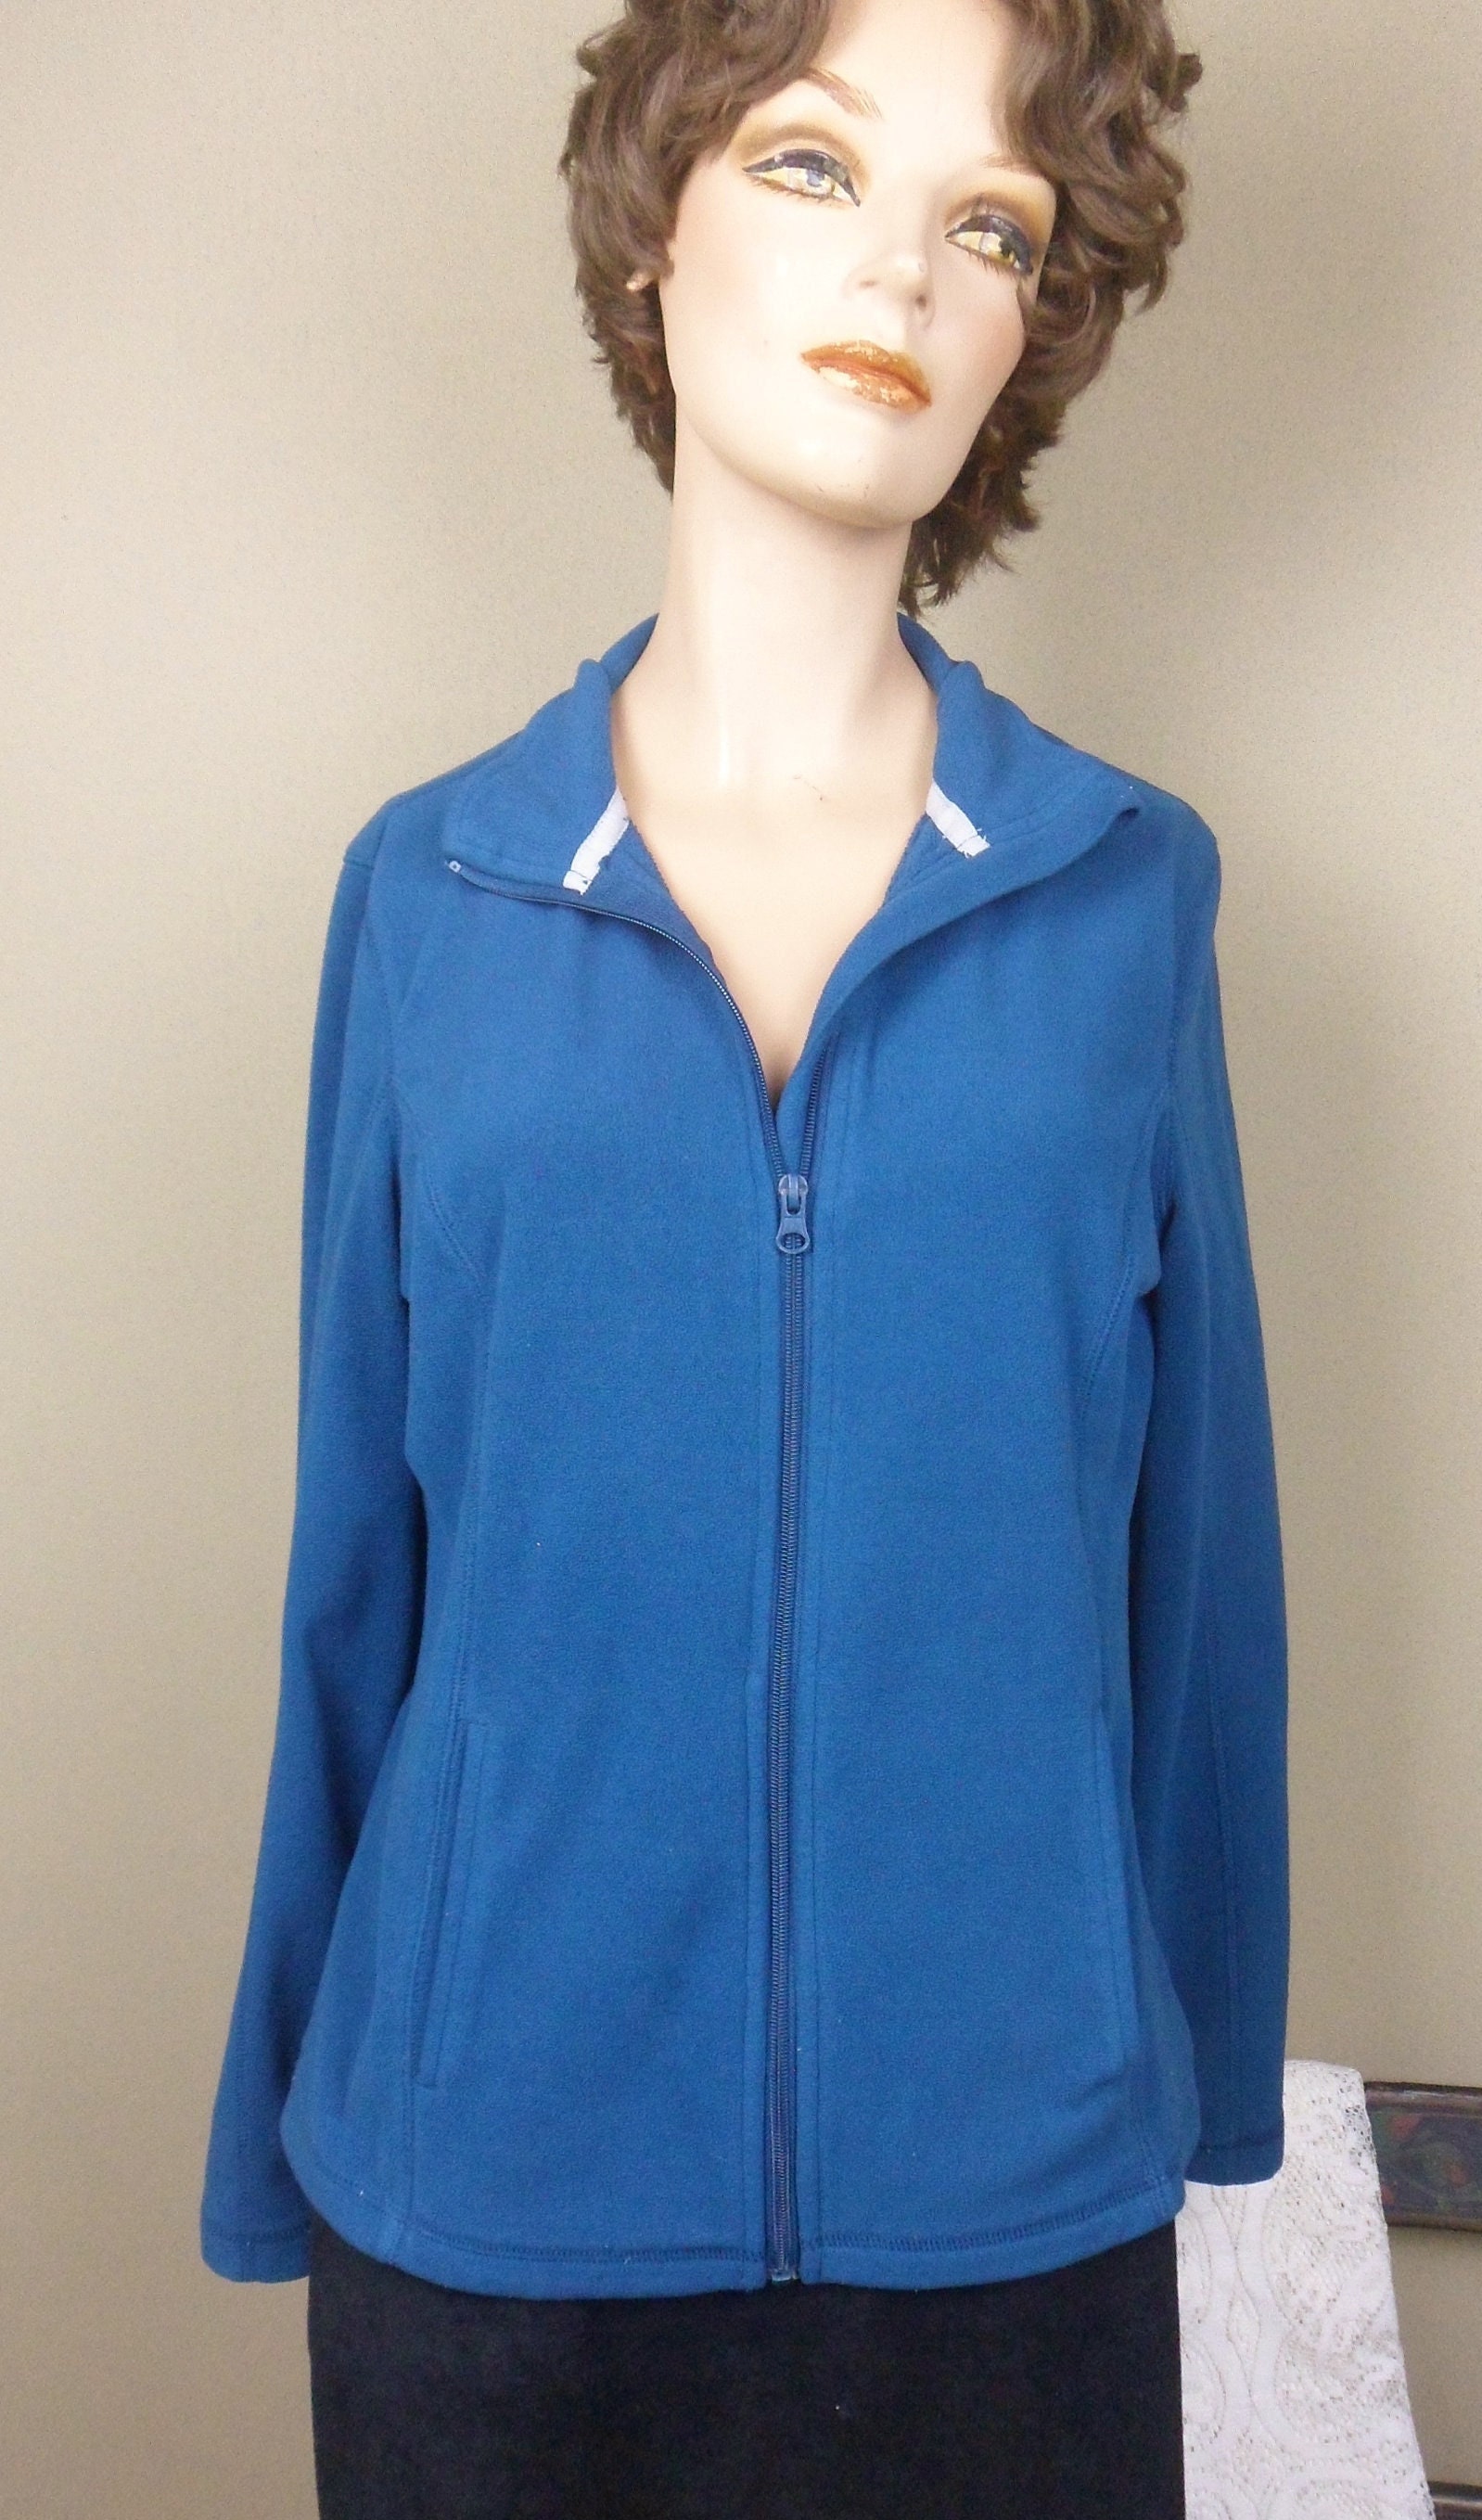 Danskin Now Blue Exercise Jacket, Vintage Workout Zipper Jacket, Size S -   Canada